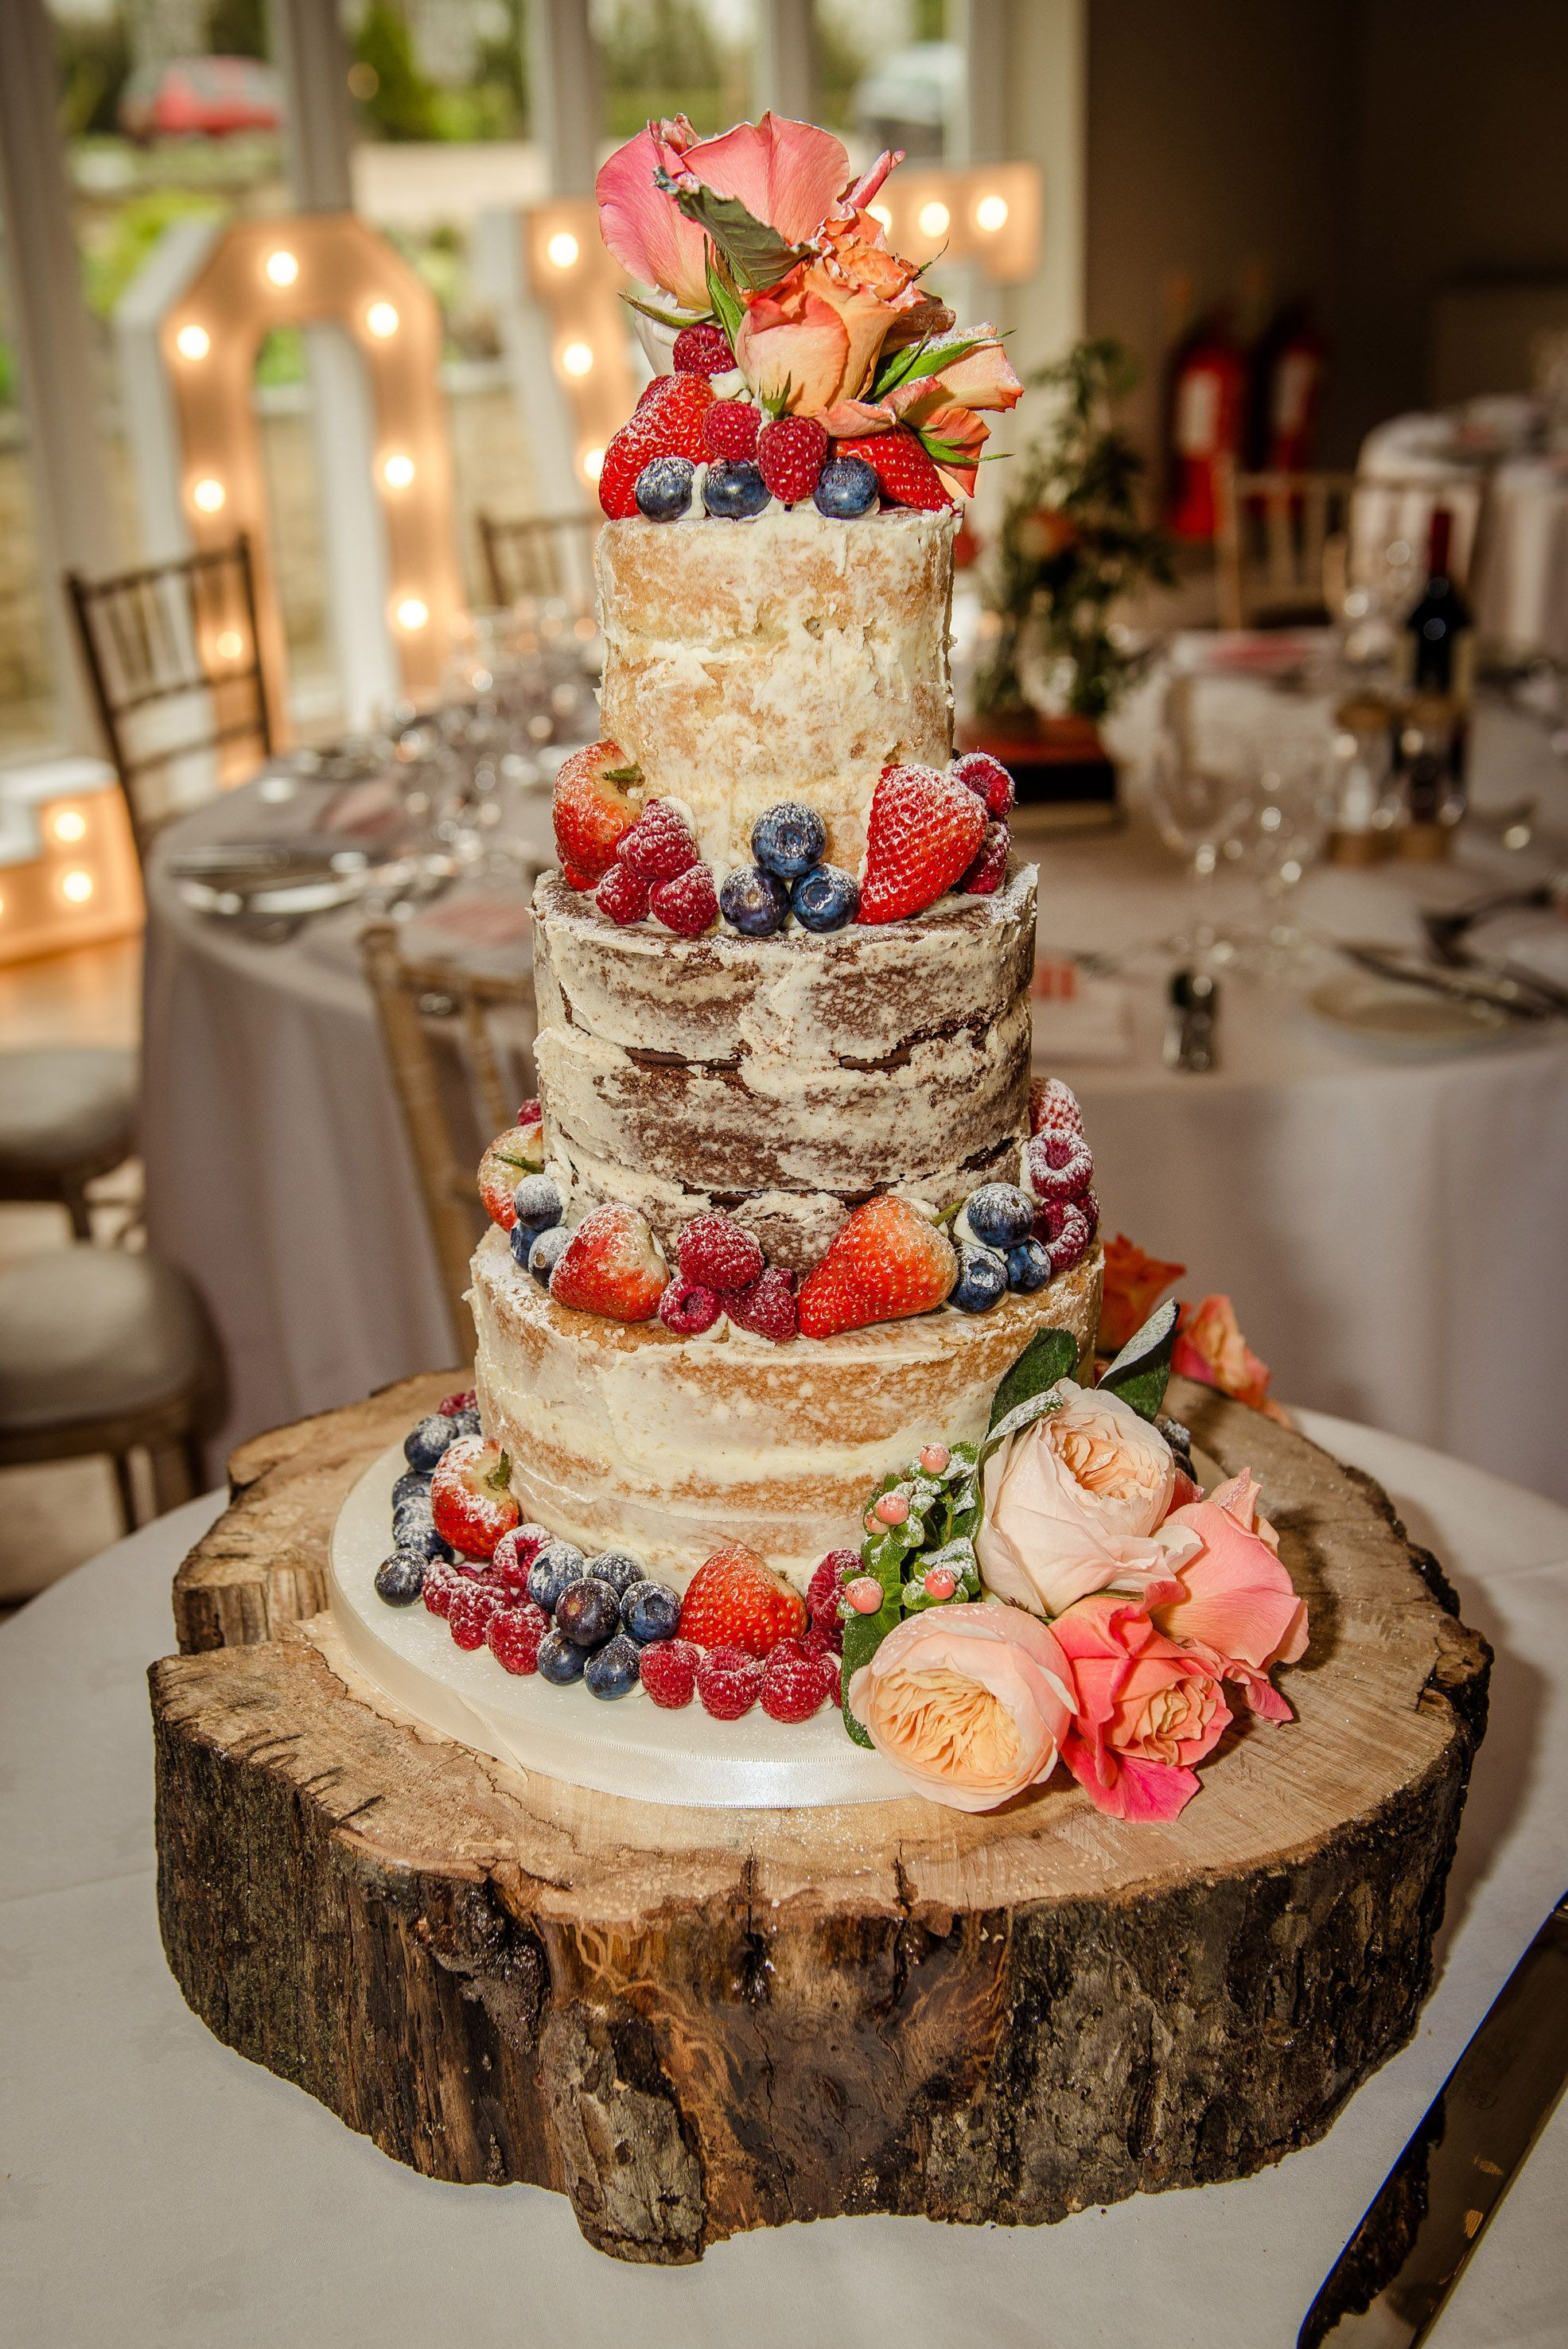 Shabby Sheek Wedding Cakes
 Naked Wedding Cake rustic shabby chic